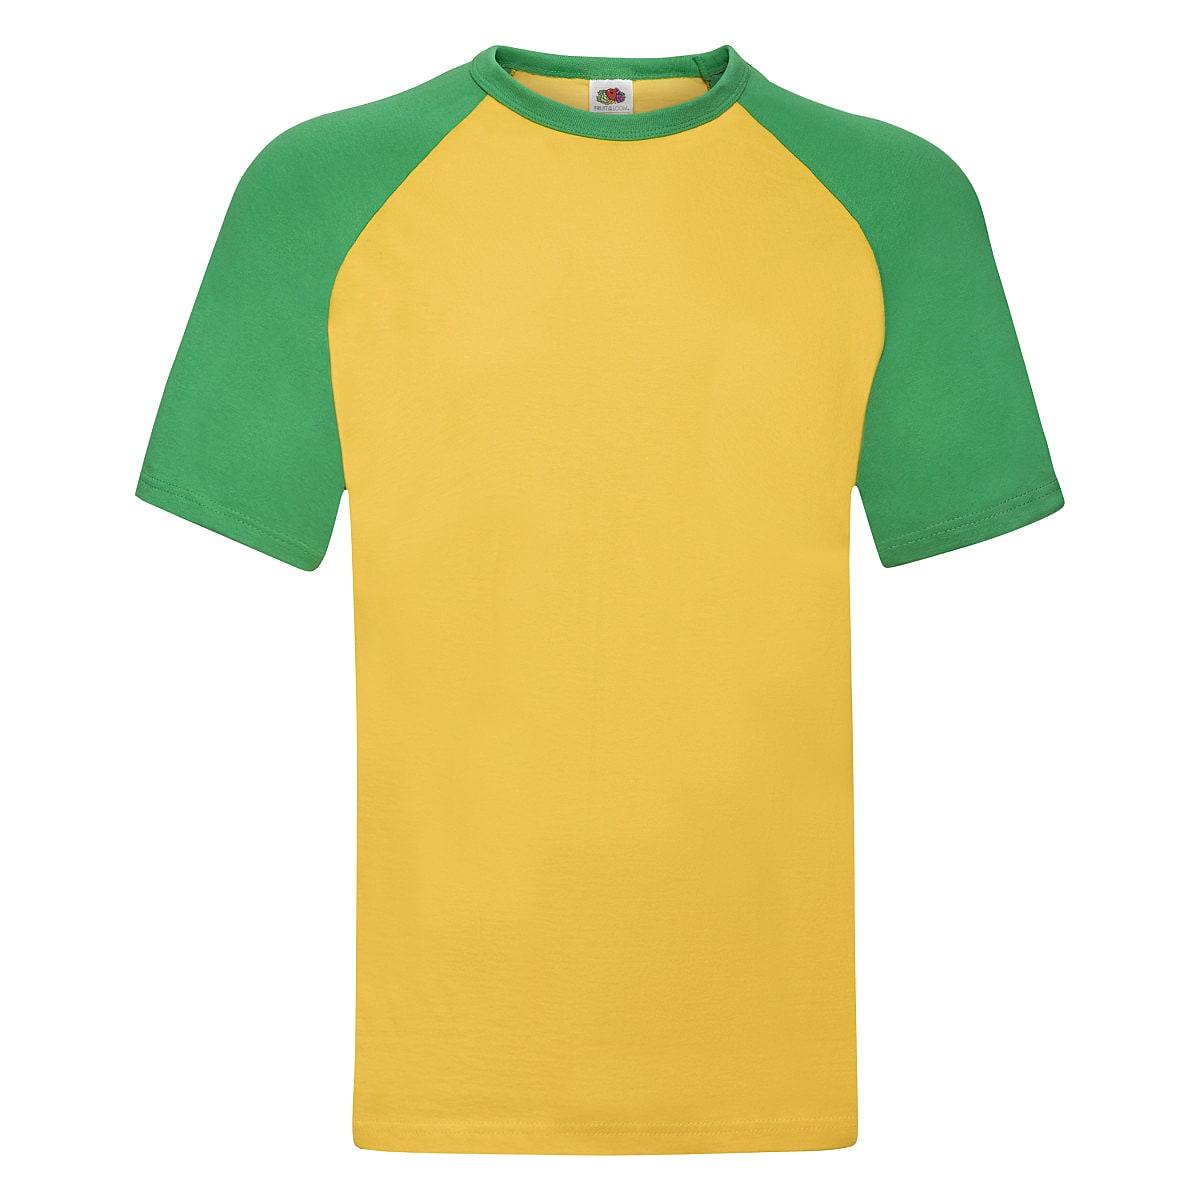 Fruit Of The Loom Short-Sleeve Baseball T-Shirt in Sunflower / Kelly Green (Product Code: 61026)